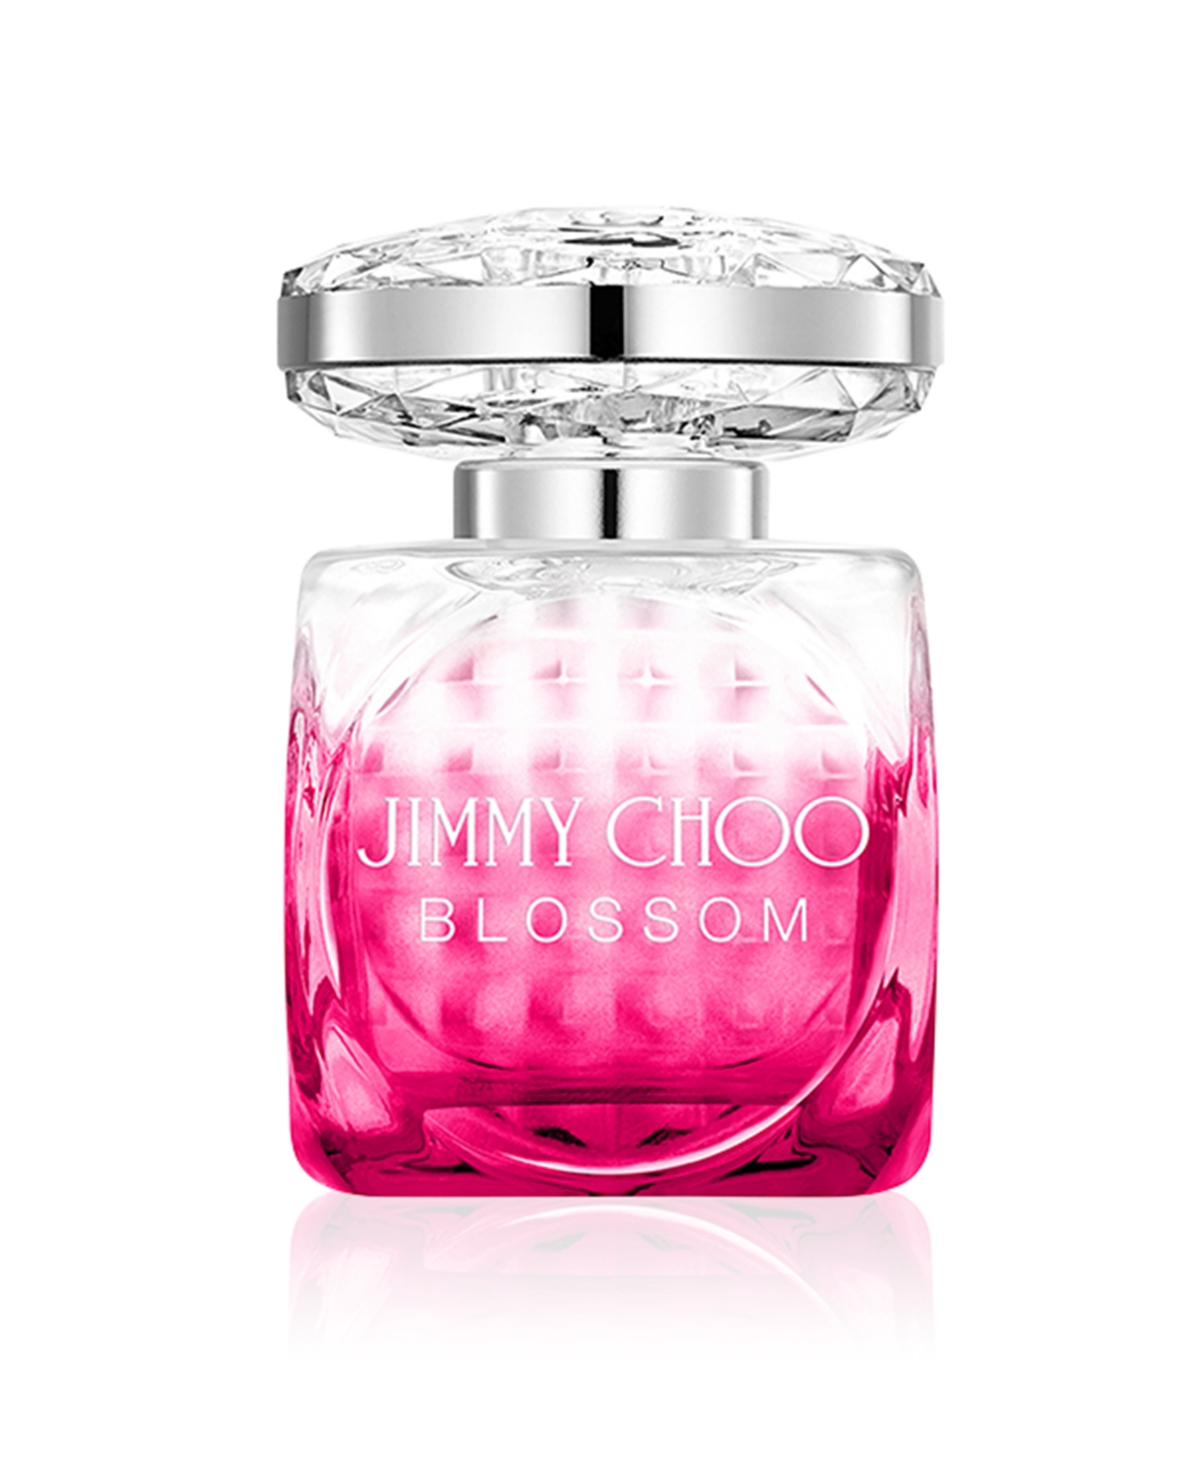 1.3-Oz Jimmy Choo Blossom Eau de Parfum Spray $30 + Free Shipping